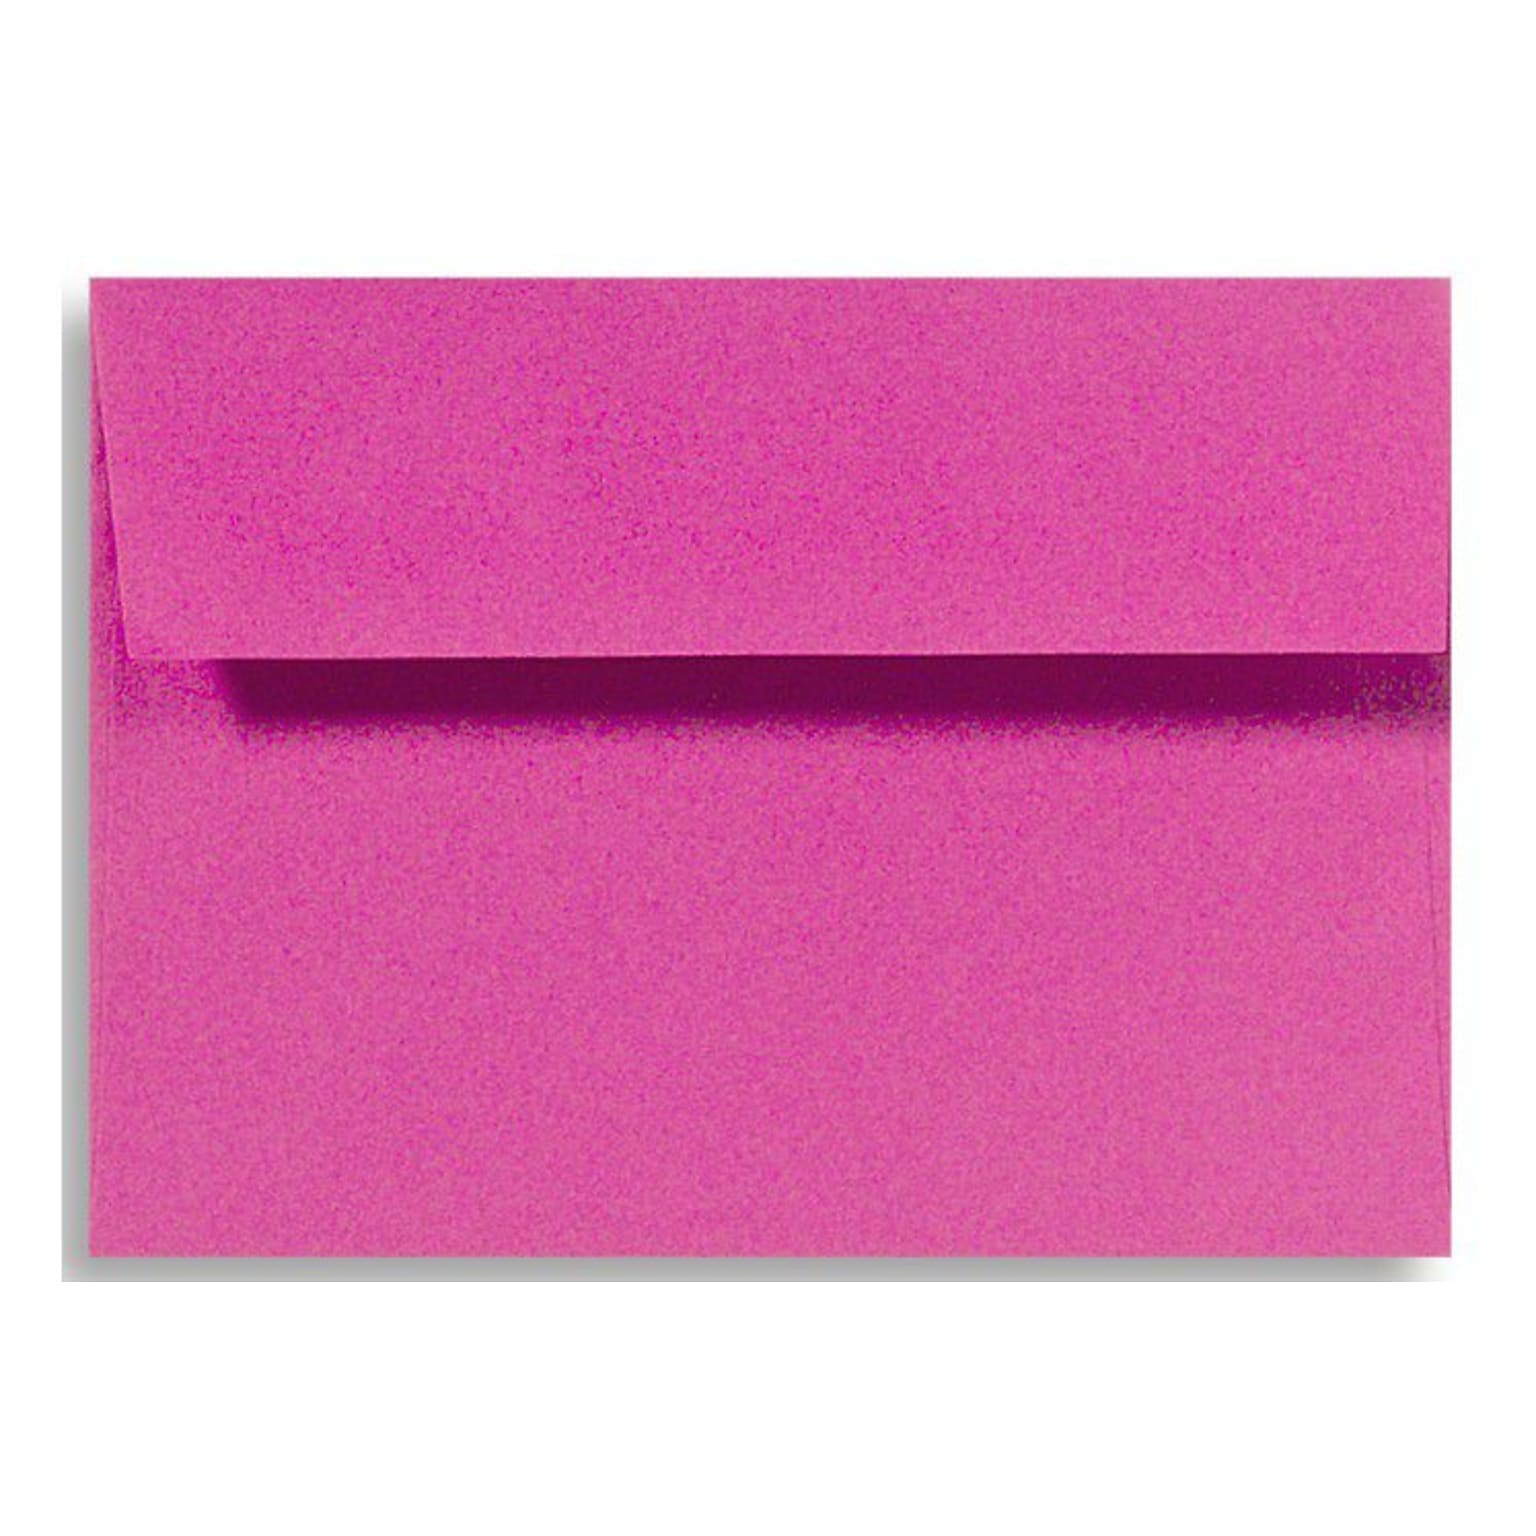 LUX 5 3/4 x 8 3/4 70lbs. A9 Invitation Envelopes W/Peel & Press, Magenta Pink, 50/Pack